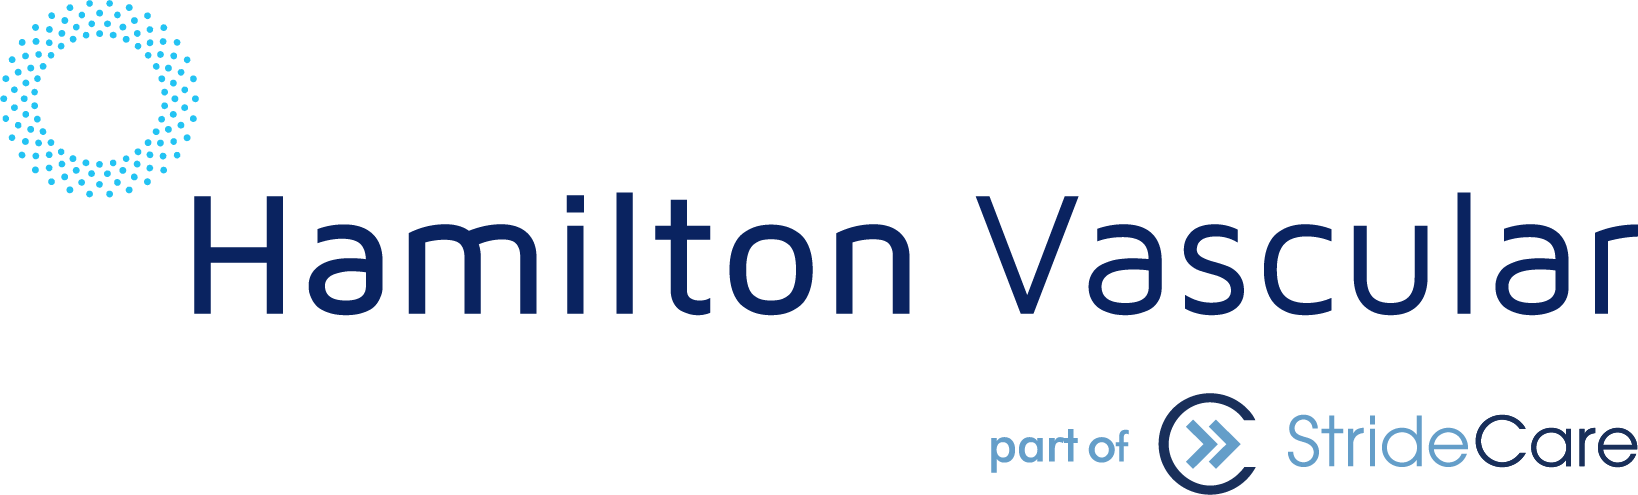 Hamilton Vascular Logo horizontal StrideCare